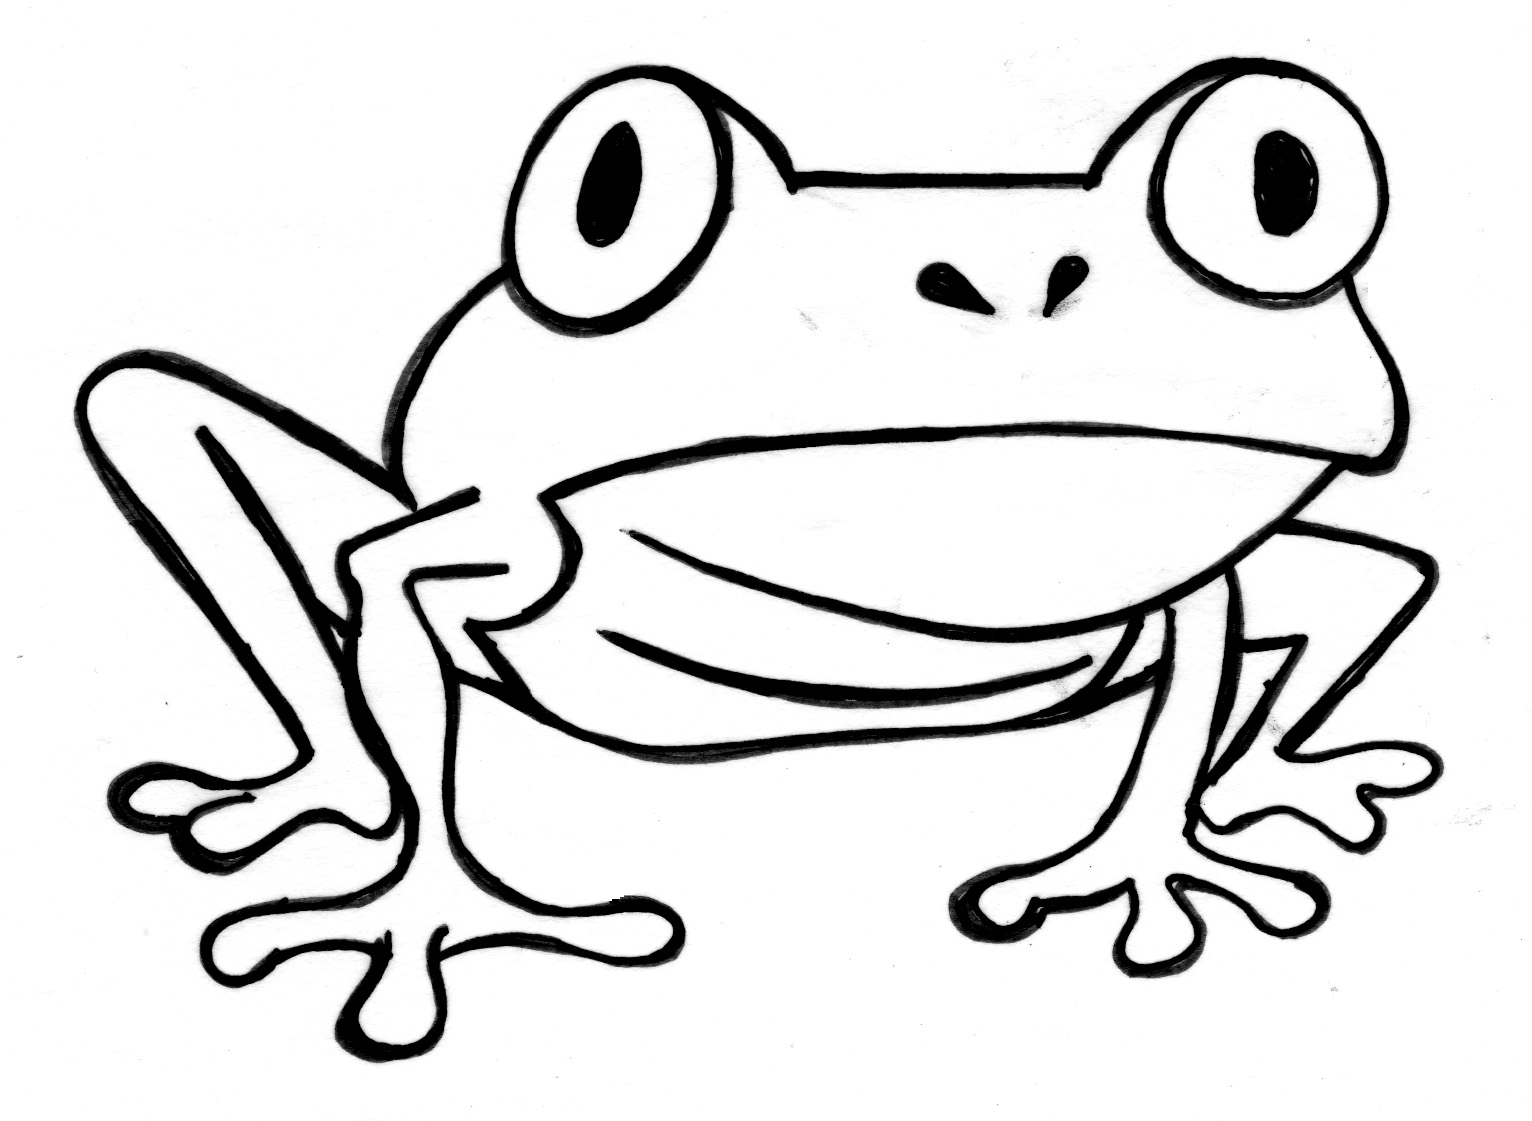 Frog Outlines - ClipArt Best